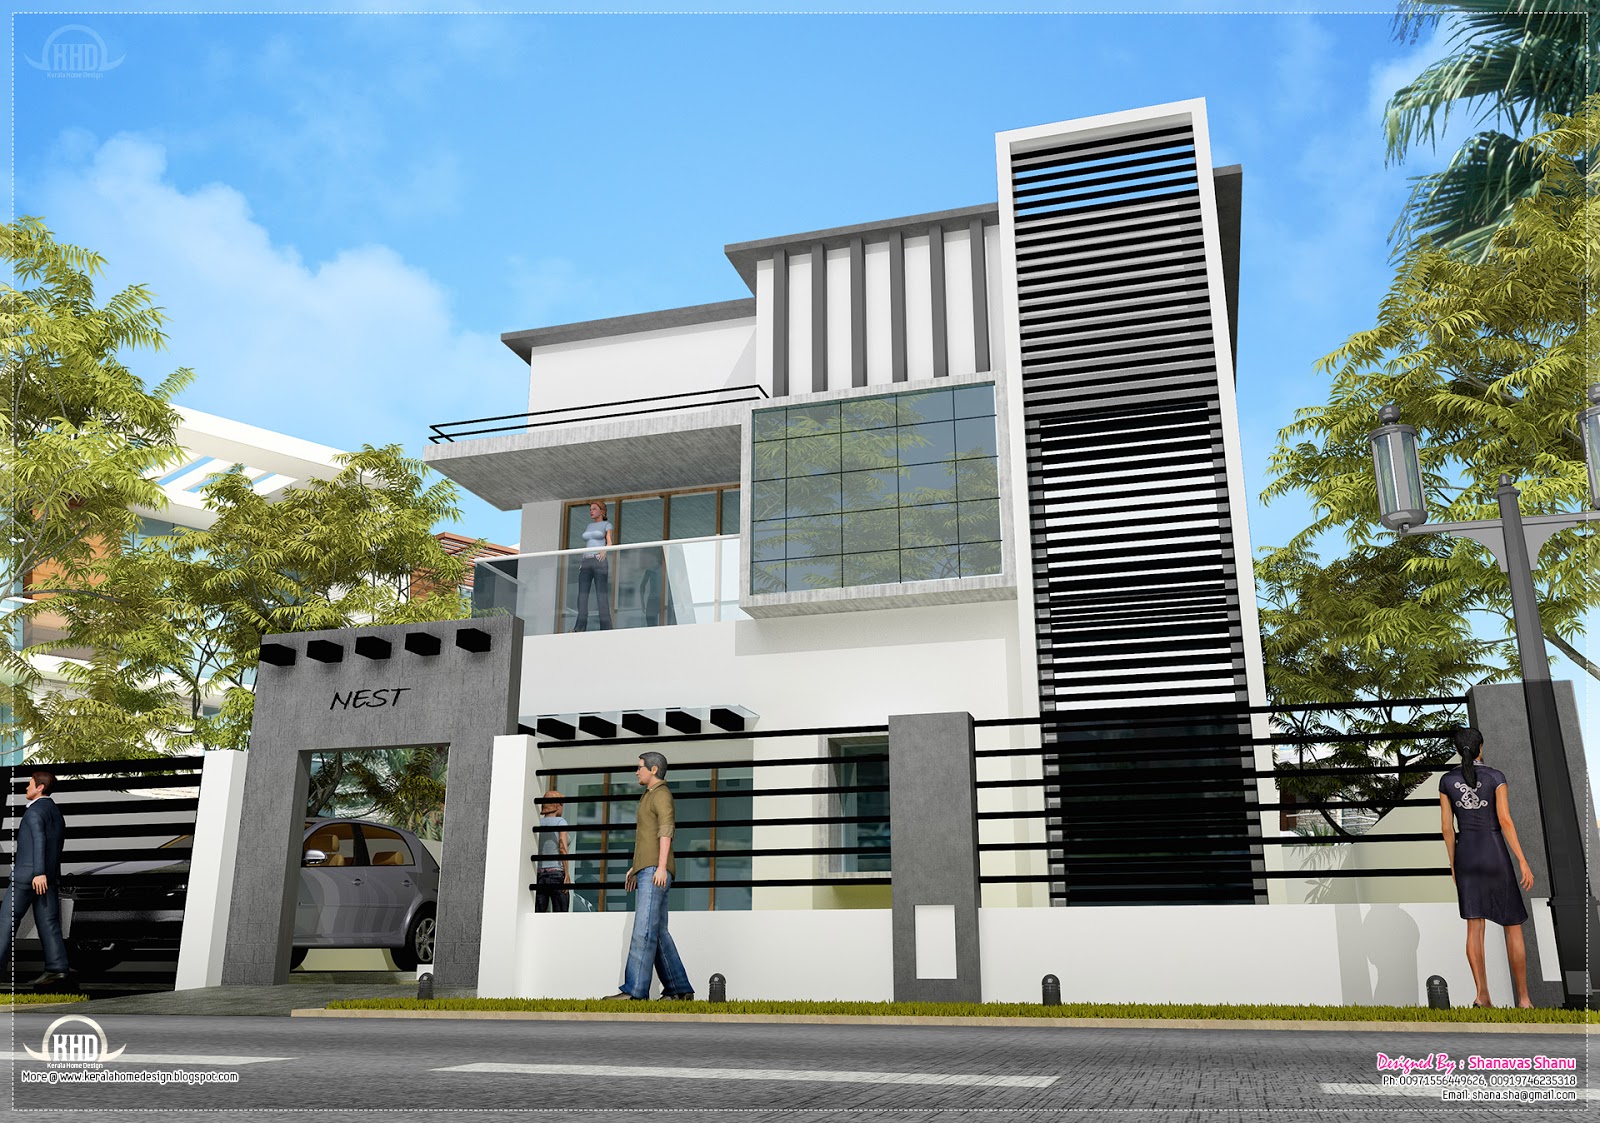  1600  sq  feet  contemporary  modern  home  design  Home  Kerala 